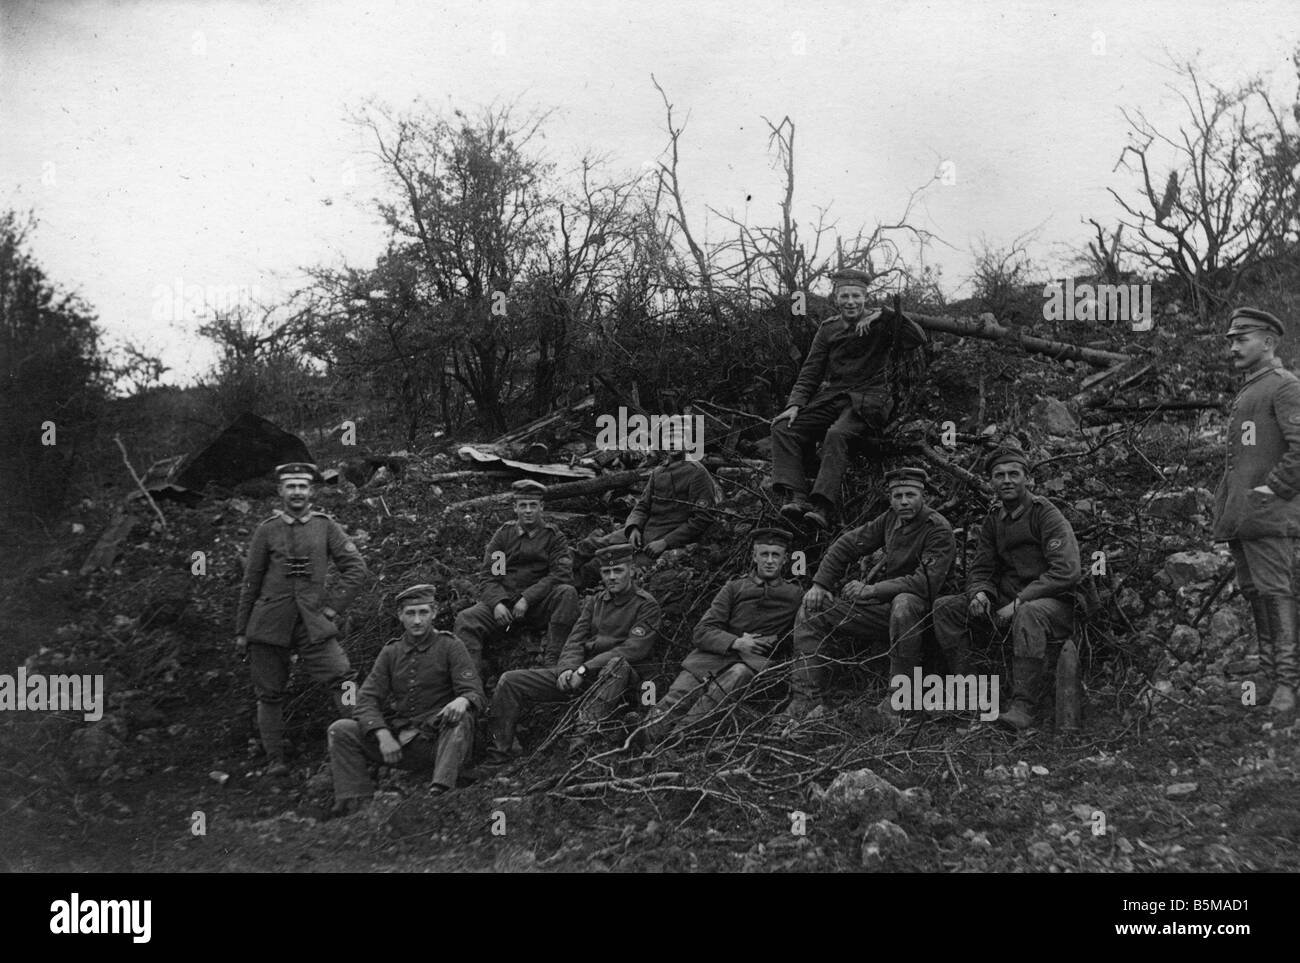 2 G55 W1 1917 17 fronte occidentale 1917 soldati tedeschi storia guerra mondiale un fronte occidentale foto di gruppo di soldati tedeschi su t Foto Stock